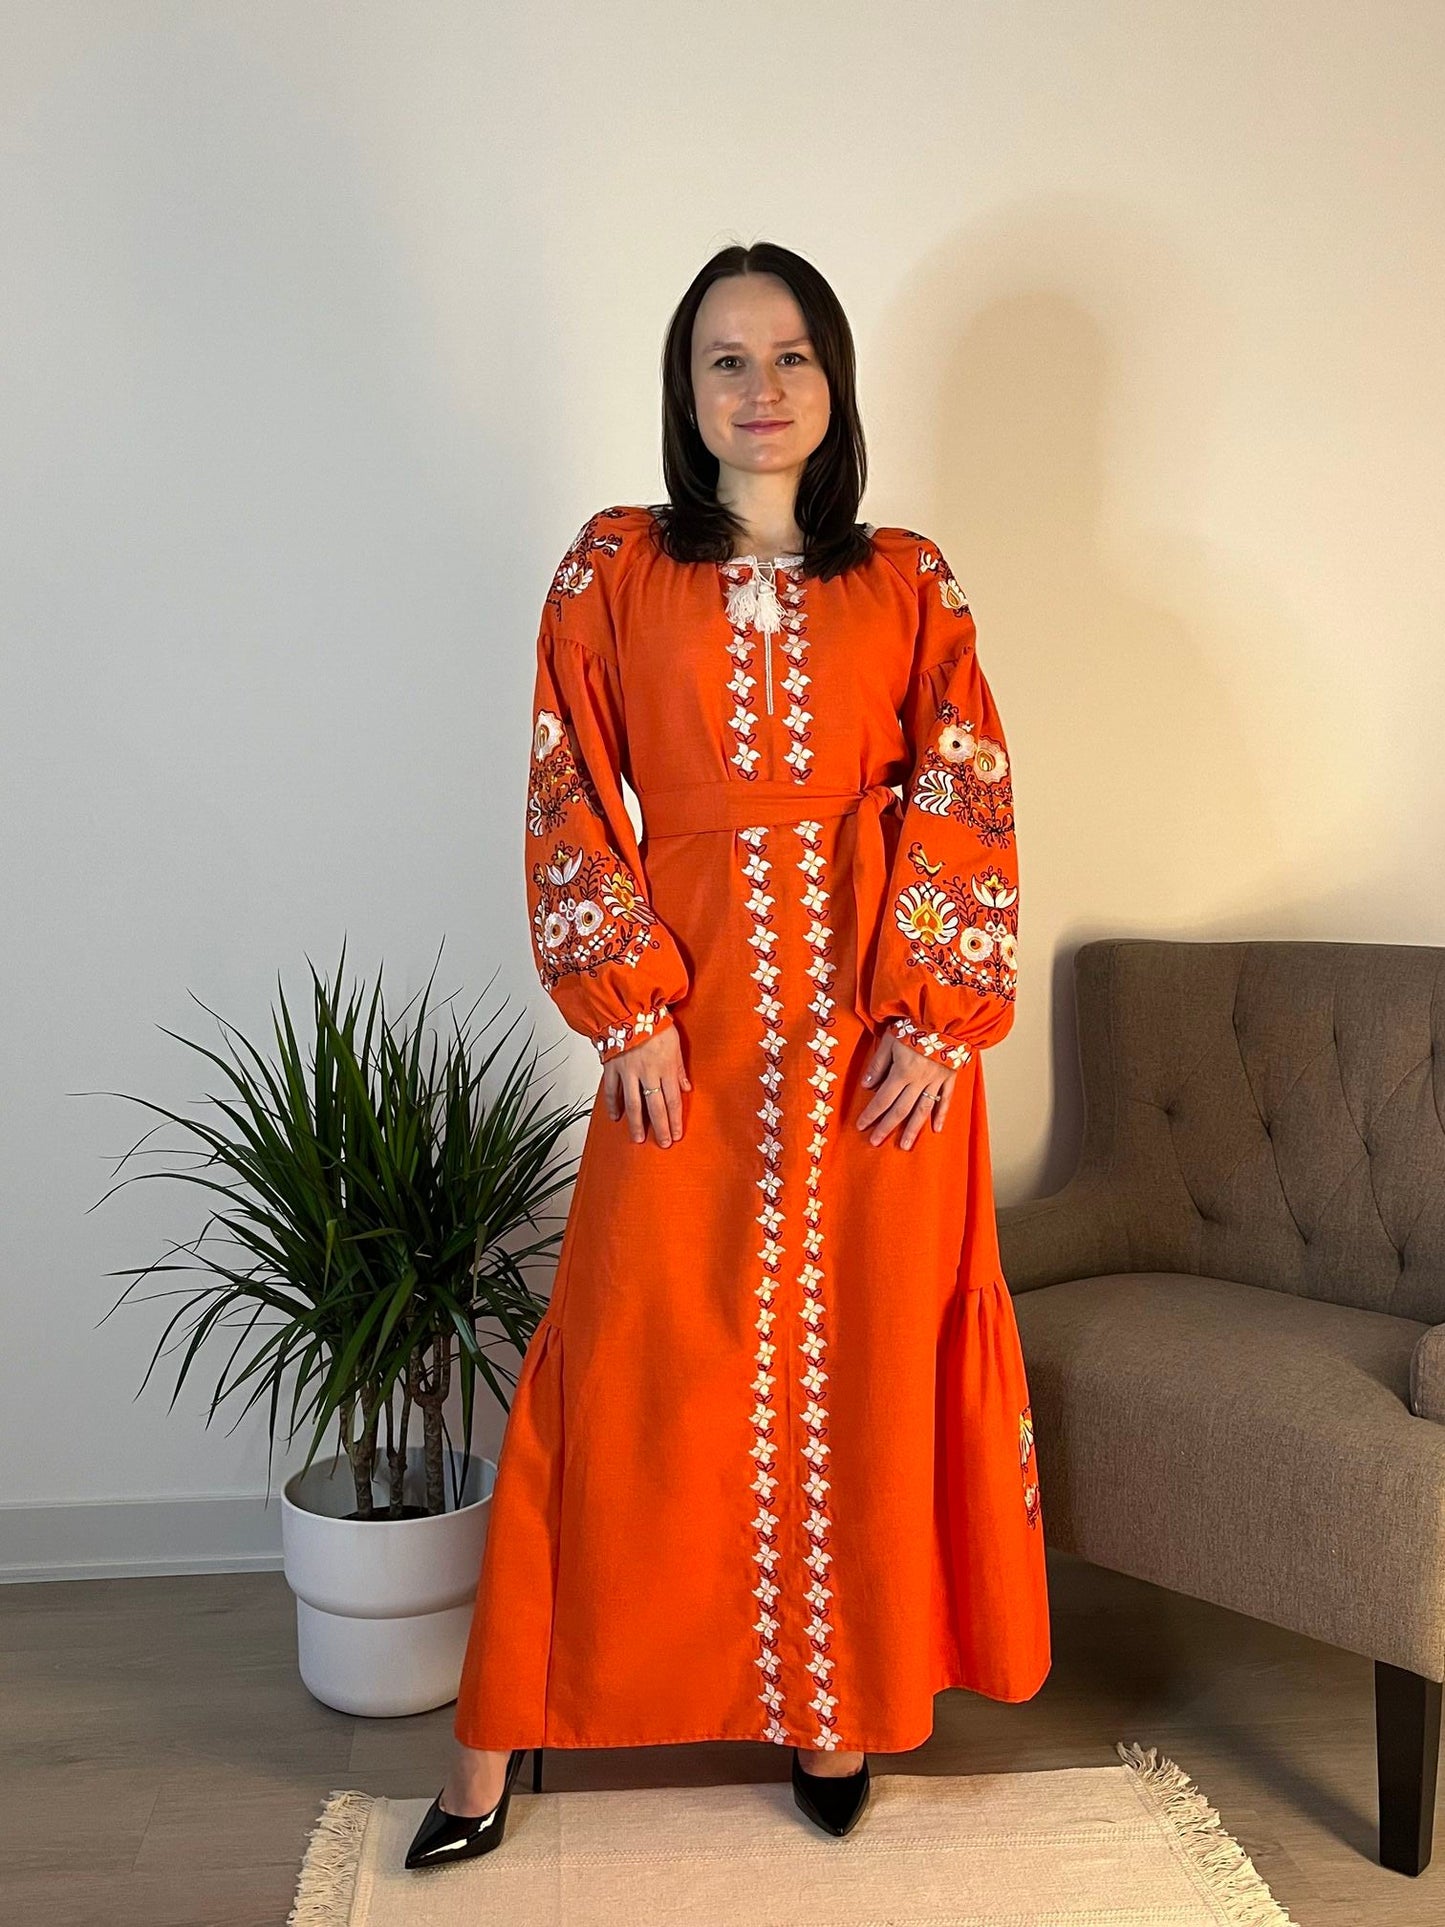 Amber Symphony: The Striking Orange Ukrainian Embroidered Dress with Vivid Details - Vatra